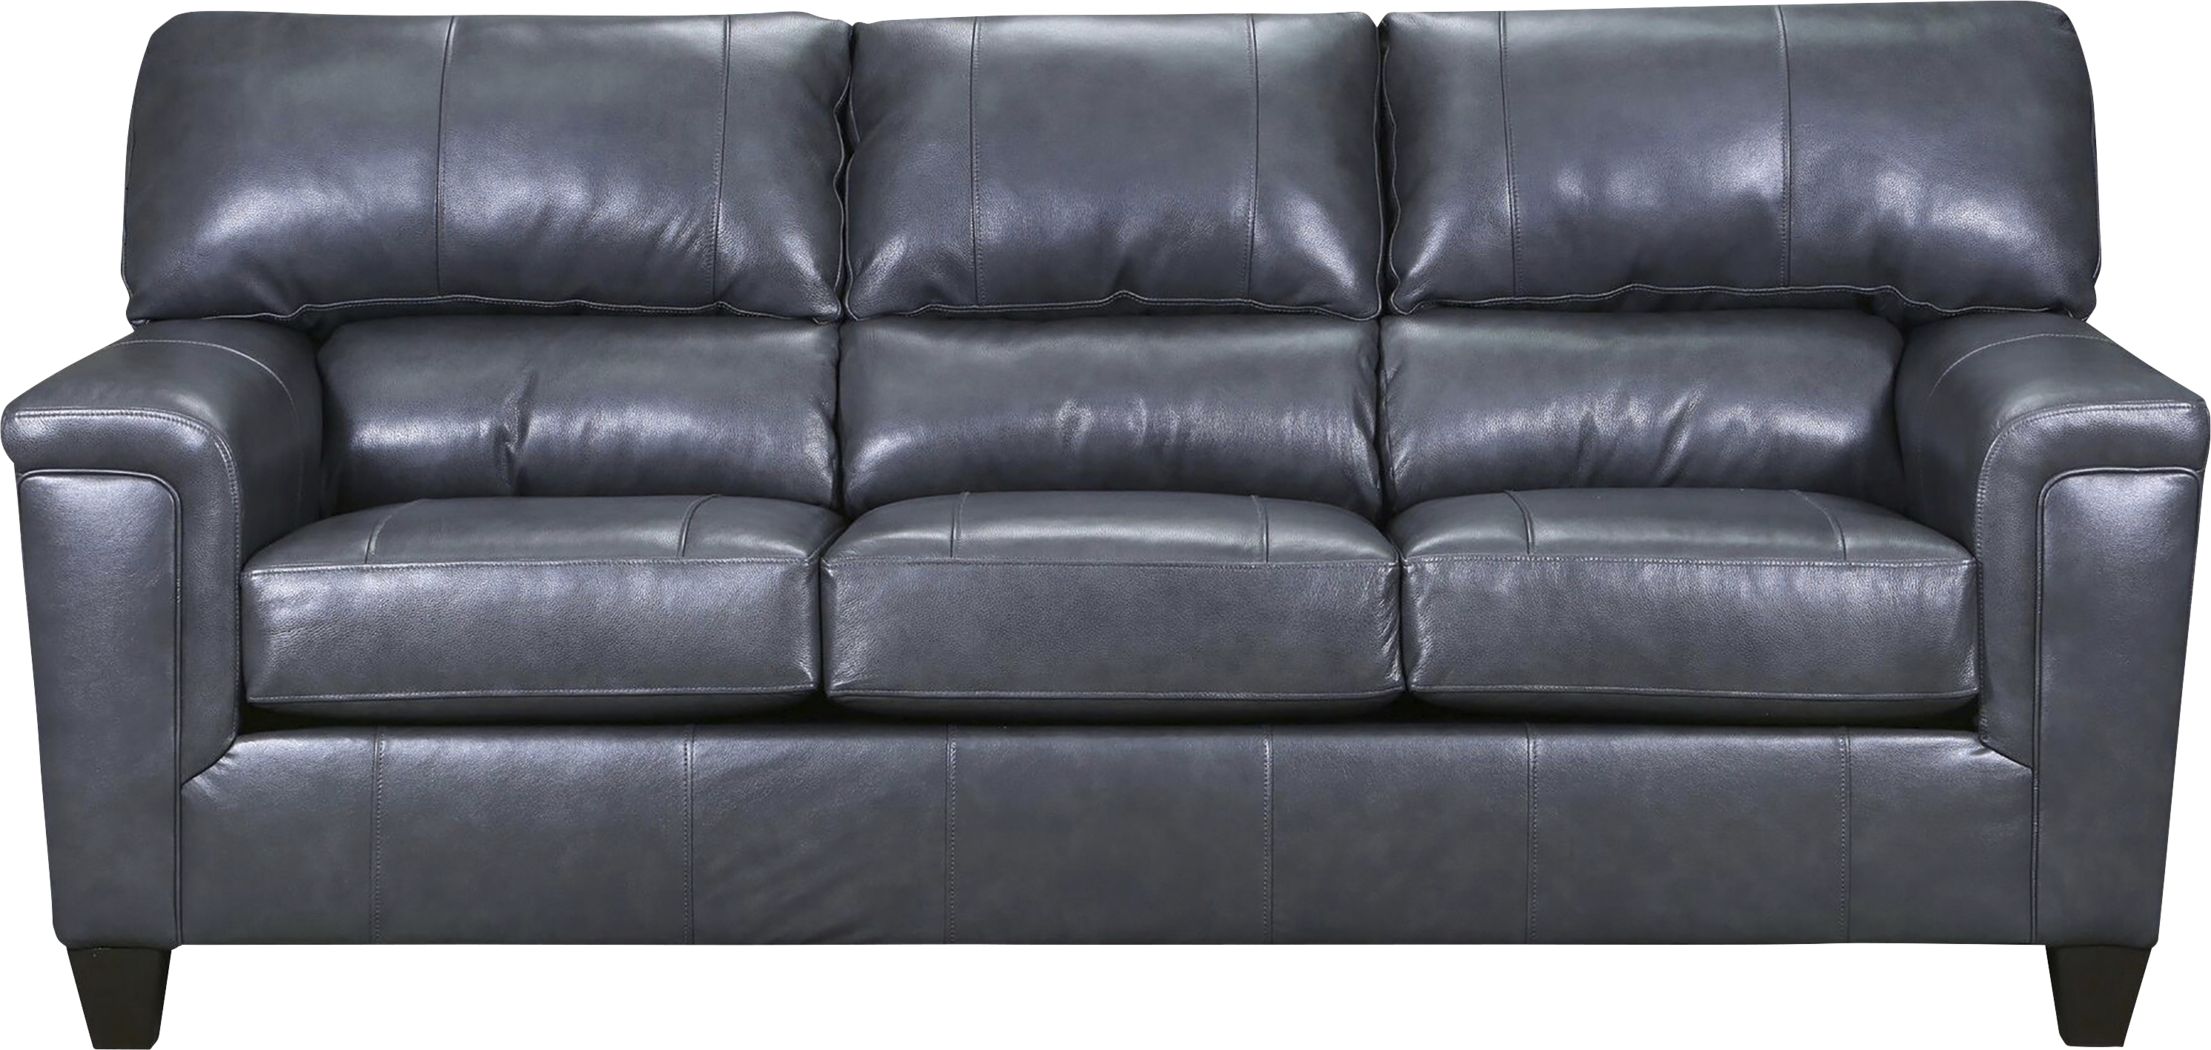 Leather Living Room Furniture, Furniture Leather Sofa